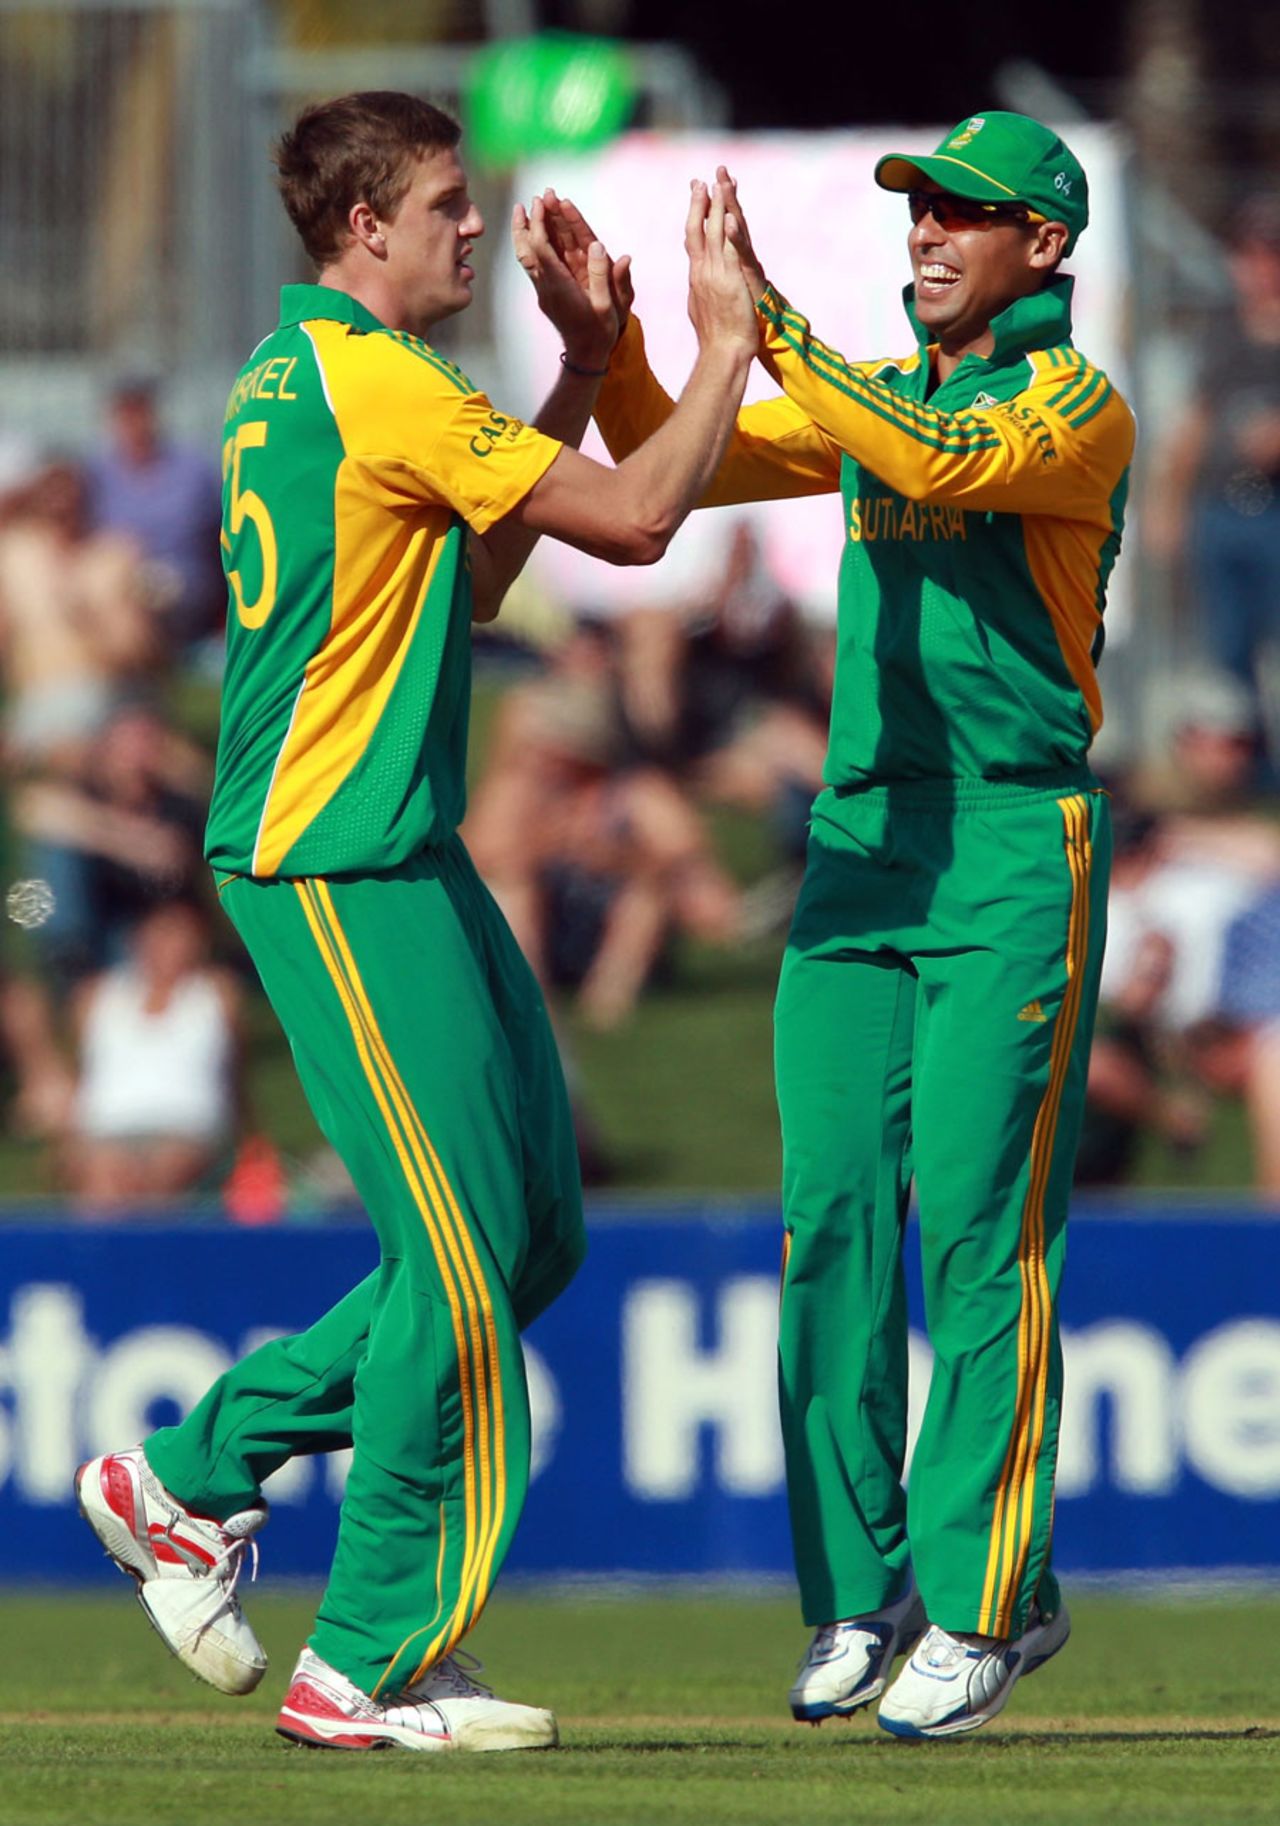 Morne Morkel and Justin Ontong celebrate the dismissal of Kyle Mills, New Zealand v South Africa, 2nd ODI, Napier, February 29, 2012 